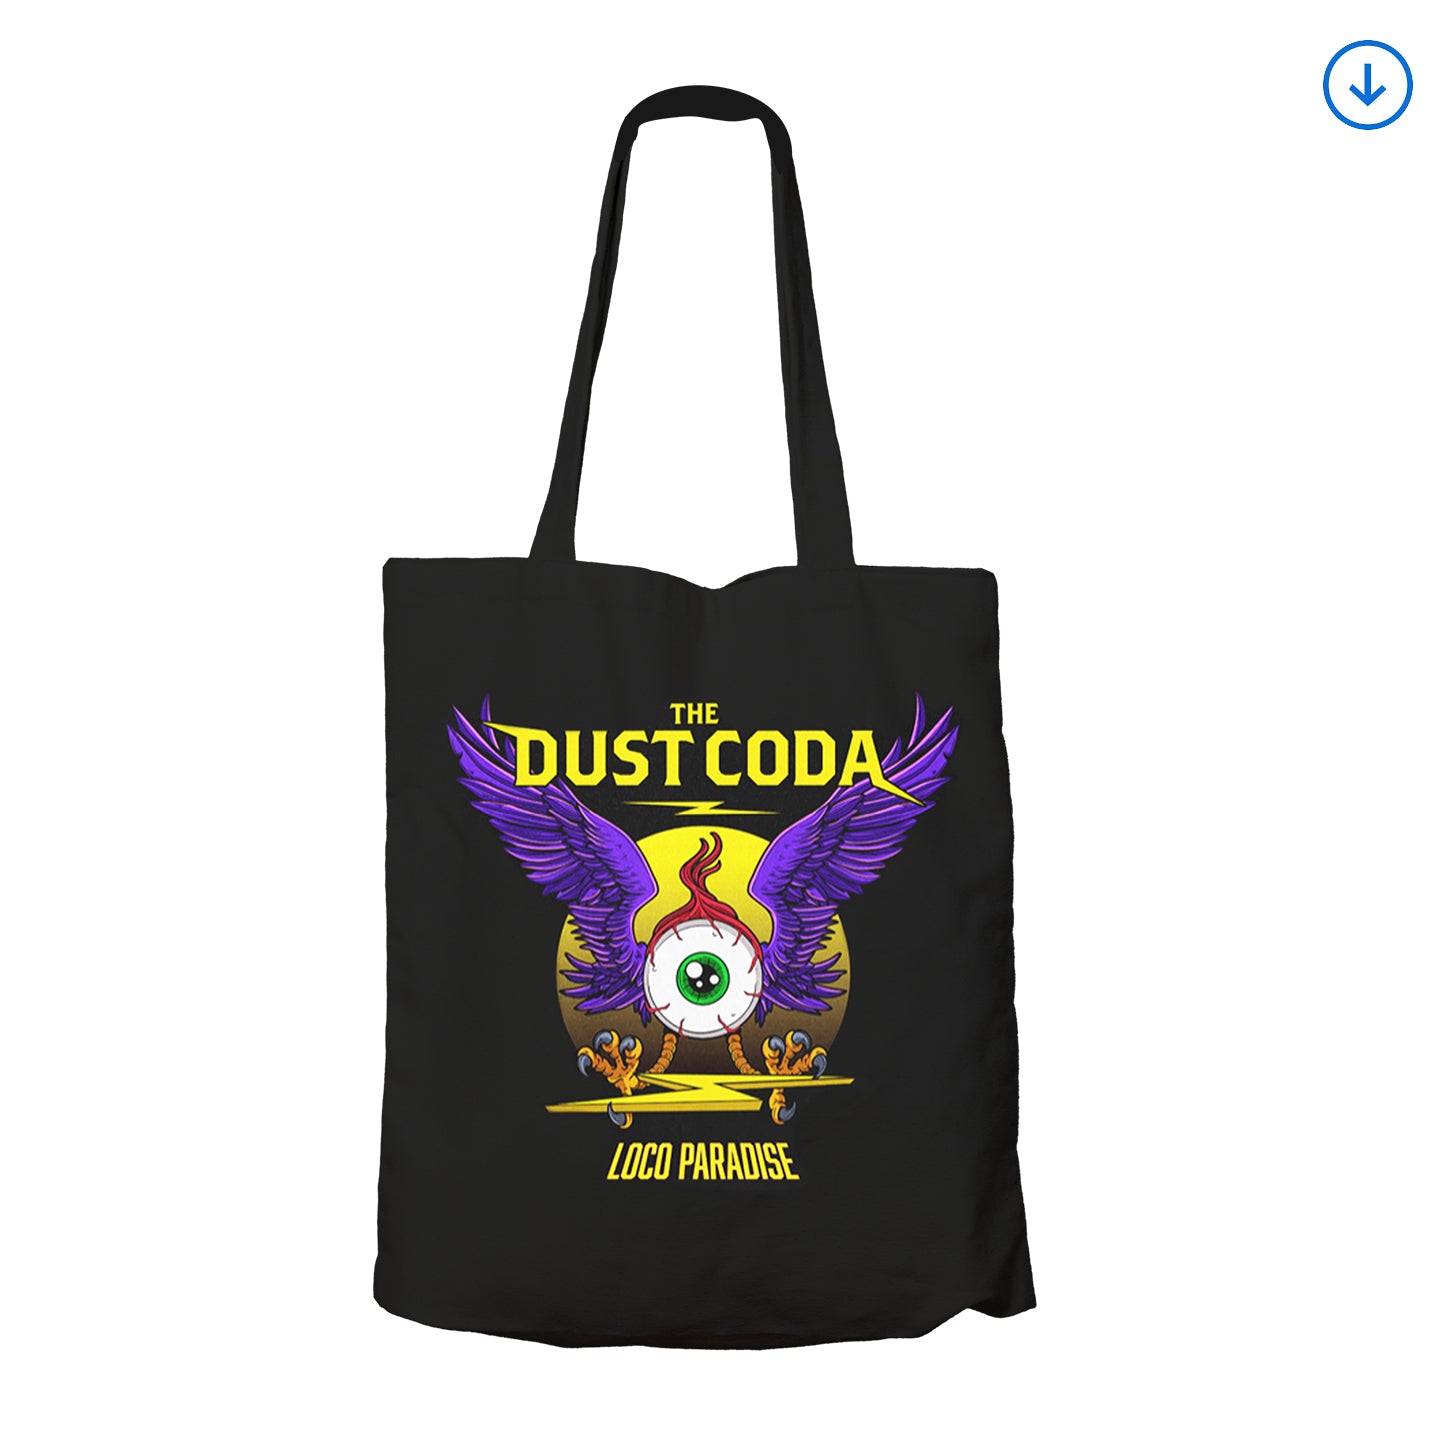 The Dust Coda "Loco Paradise" Tote Bag